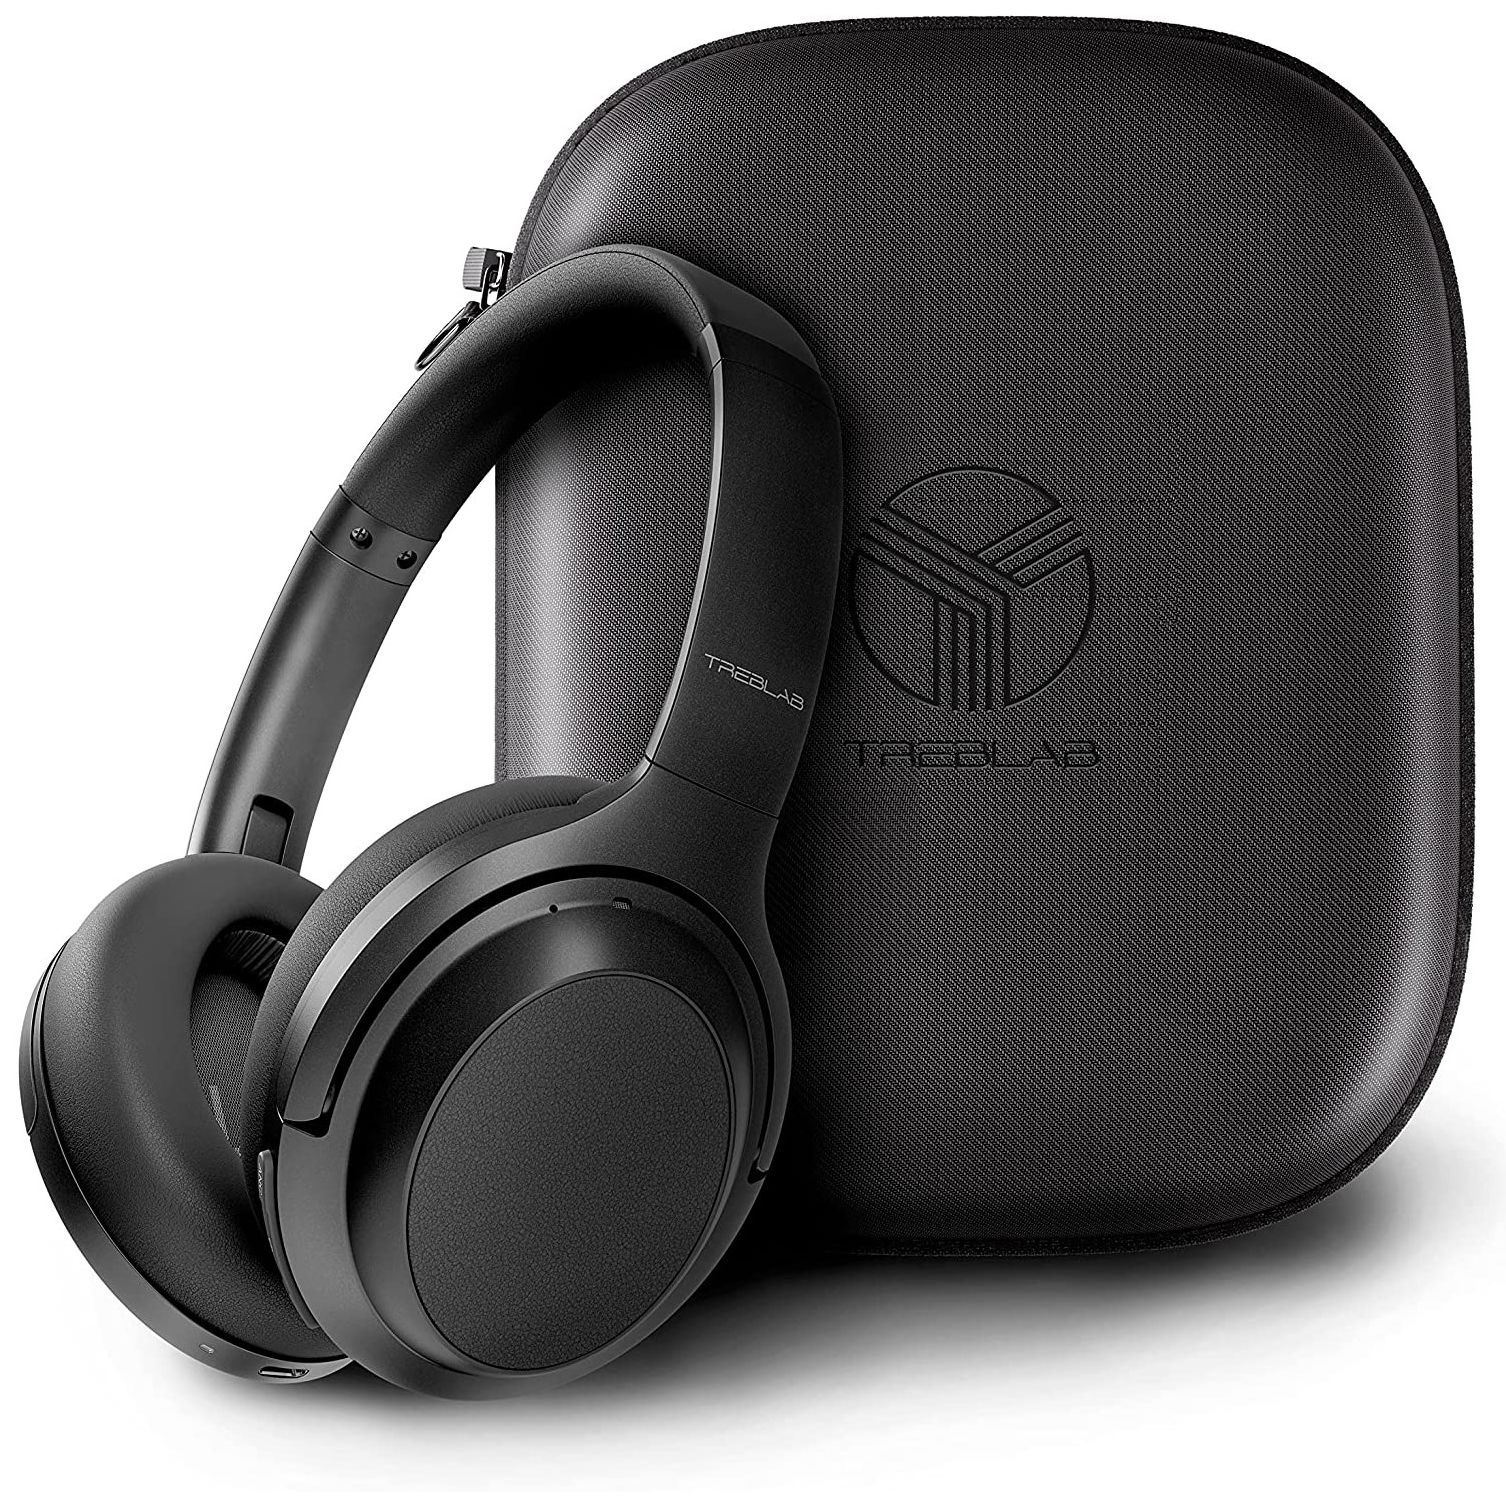 Treblab Z7 Pro wireless headphones